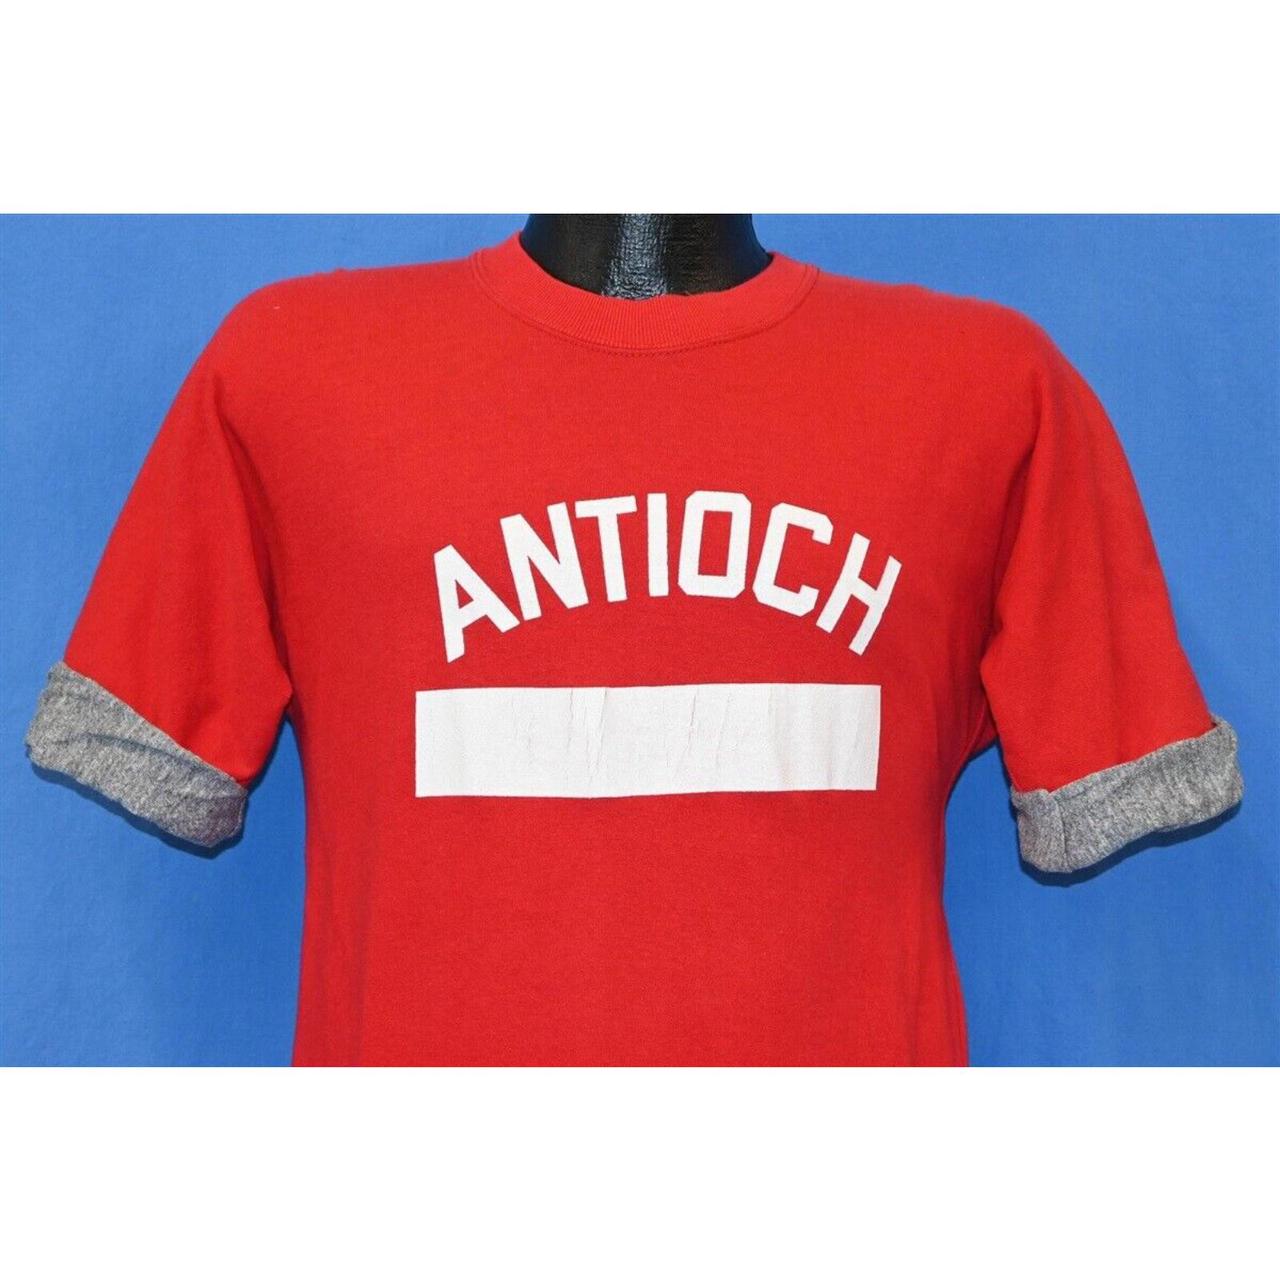 Antioch Men's Red T-shirt